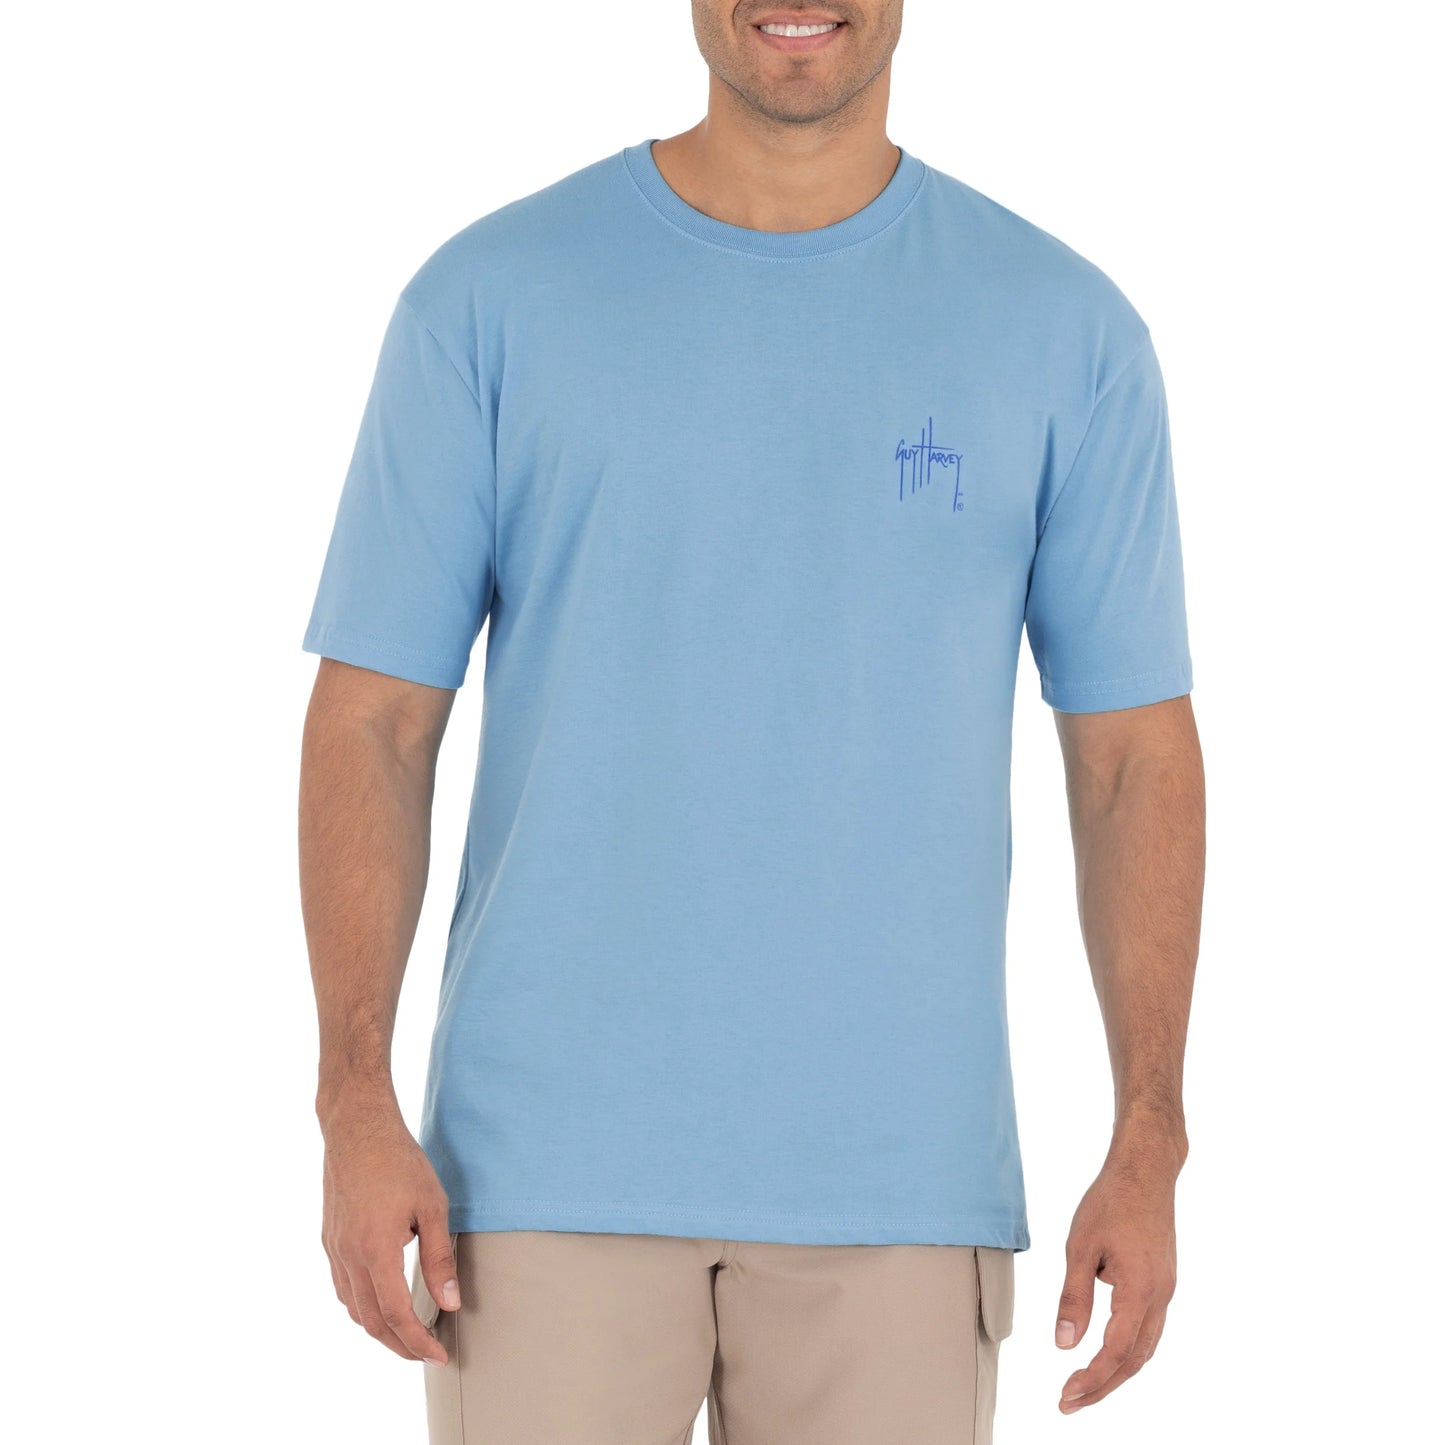 Guy Harvey Water Shield T-Shirt